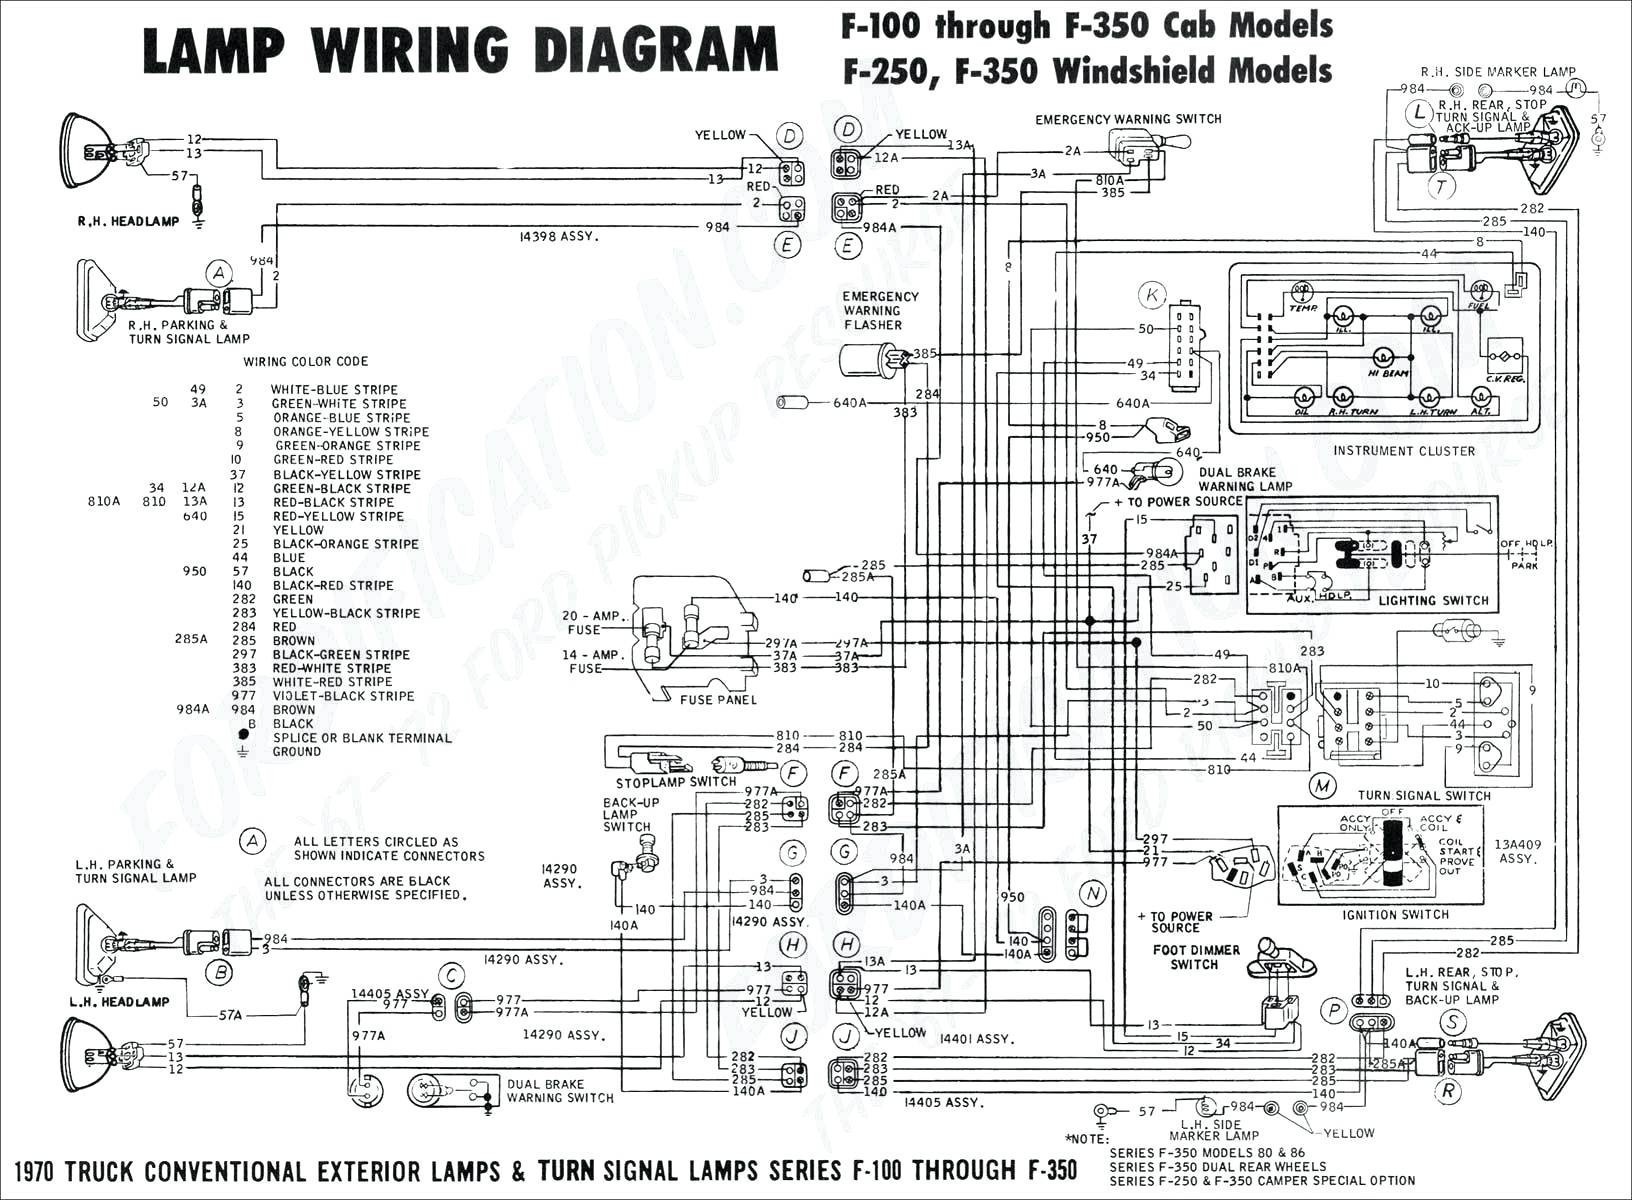 Trailer Wiring Diagram For 2002 Gmc Sierra Save Ford F250 Trailer